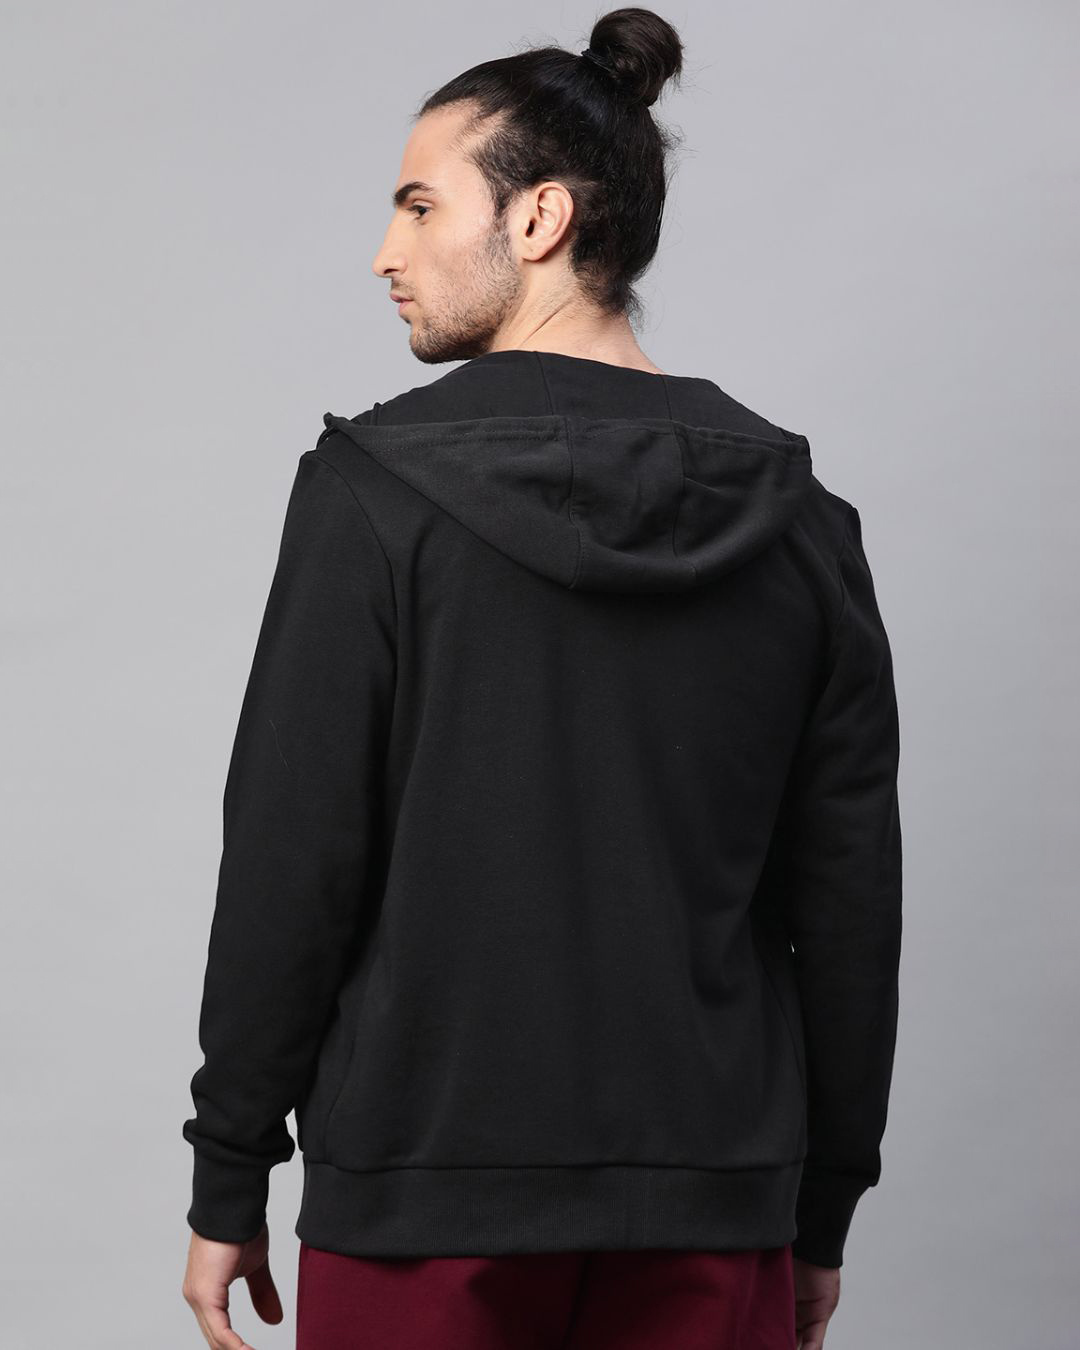 Shop Men Black Slim Fit Sweatshirt-Back